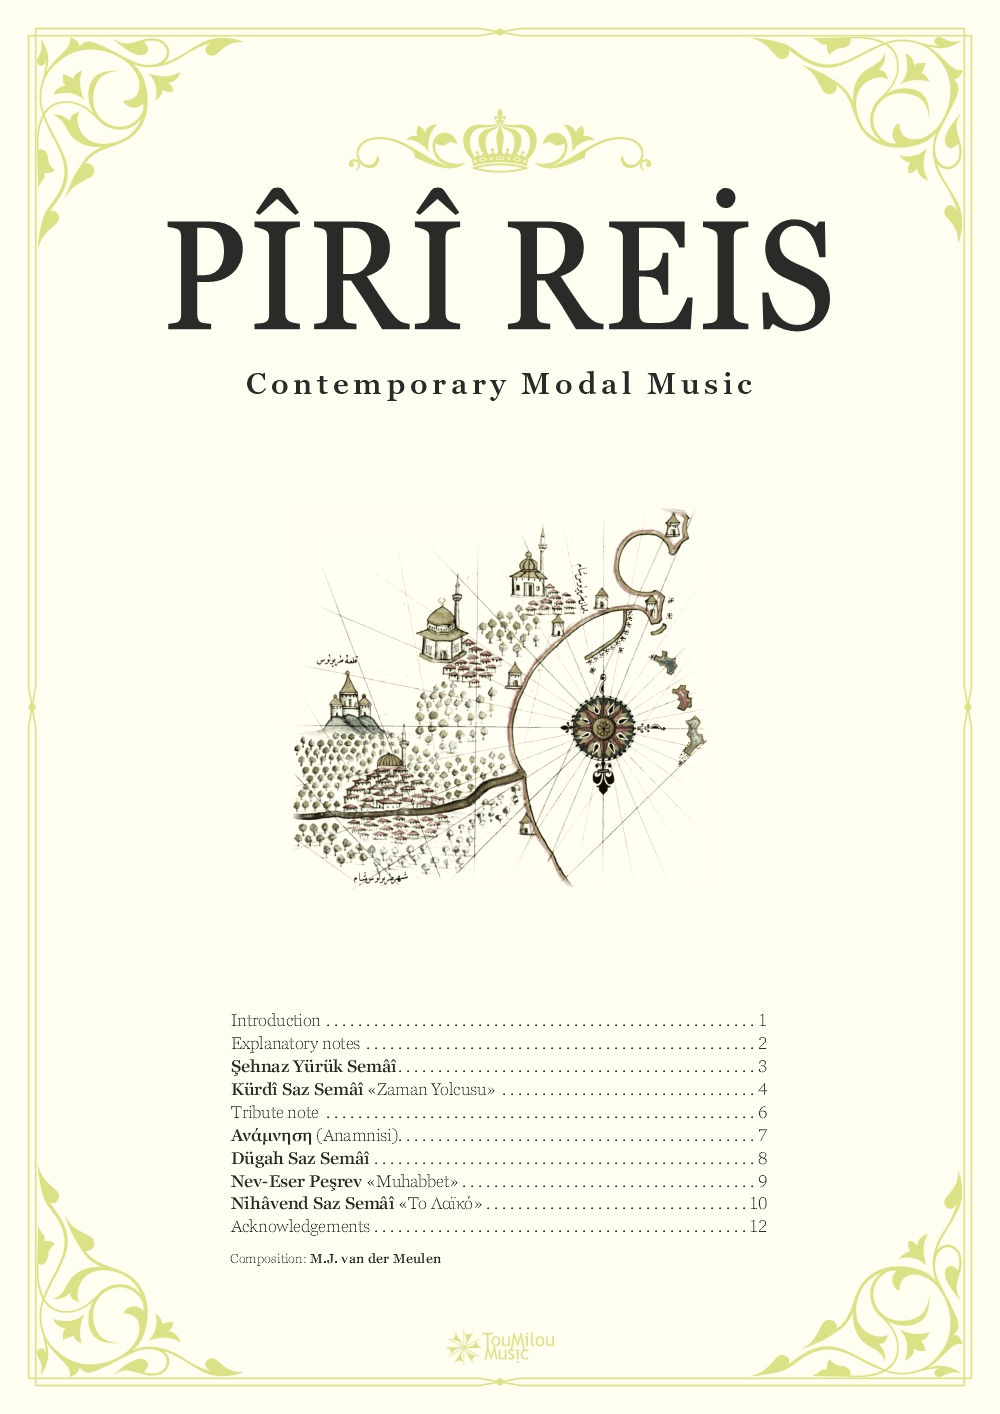 Pîrî Reis scores (Michiel van der Meulen, 2016)